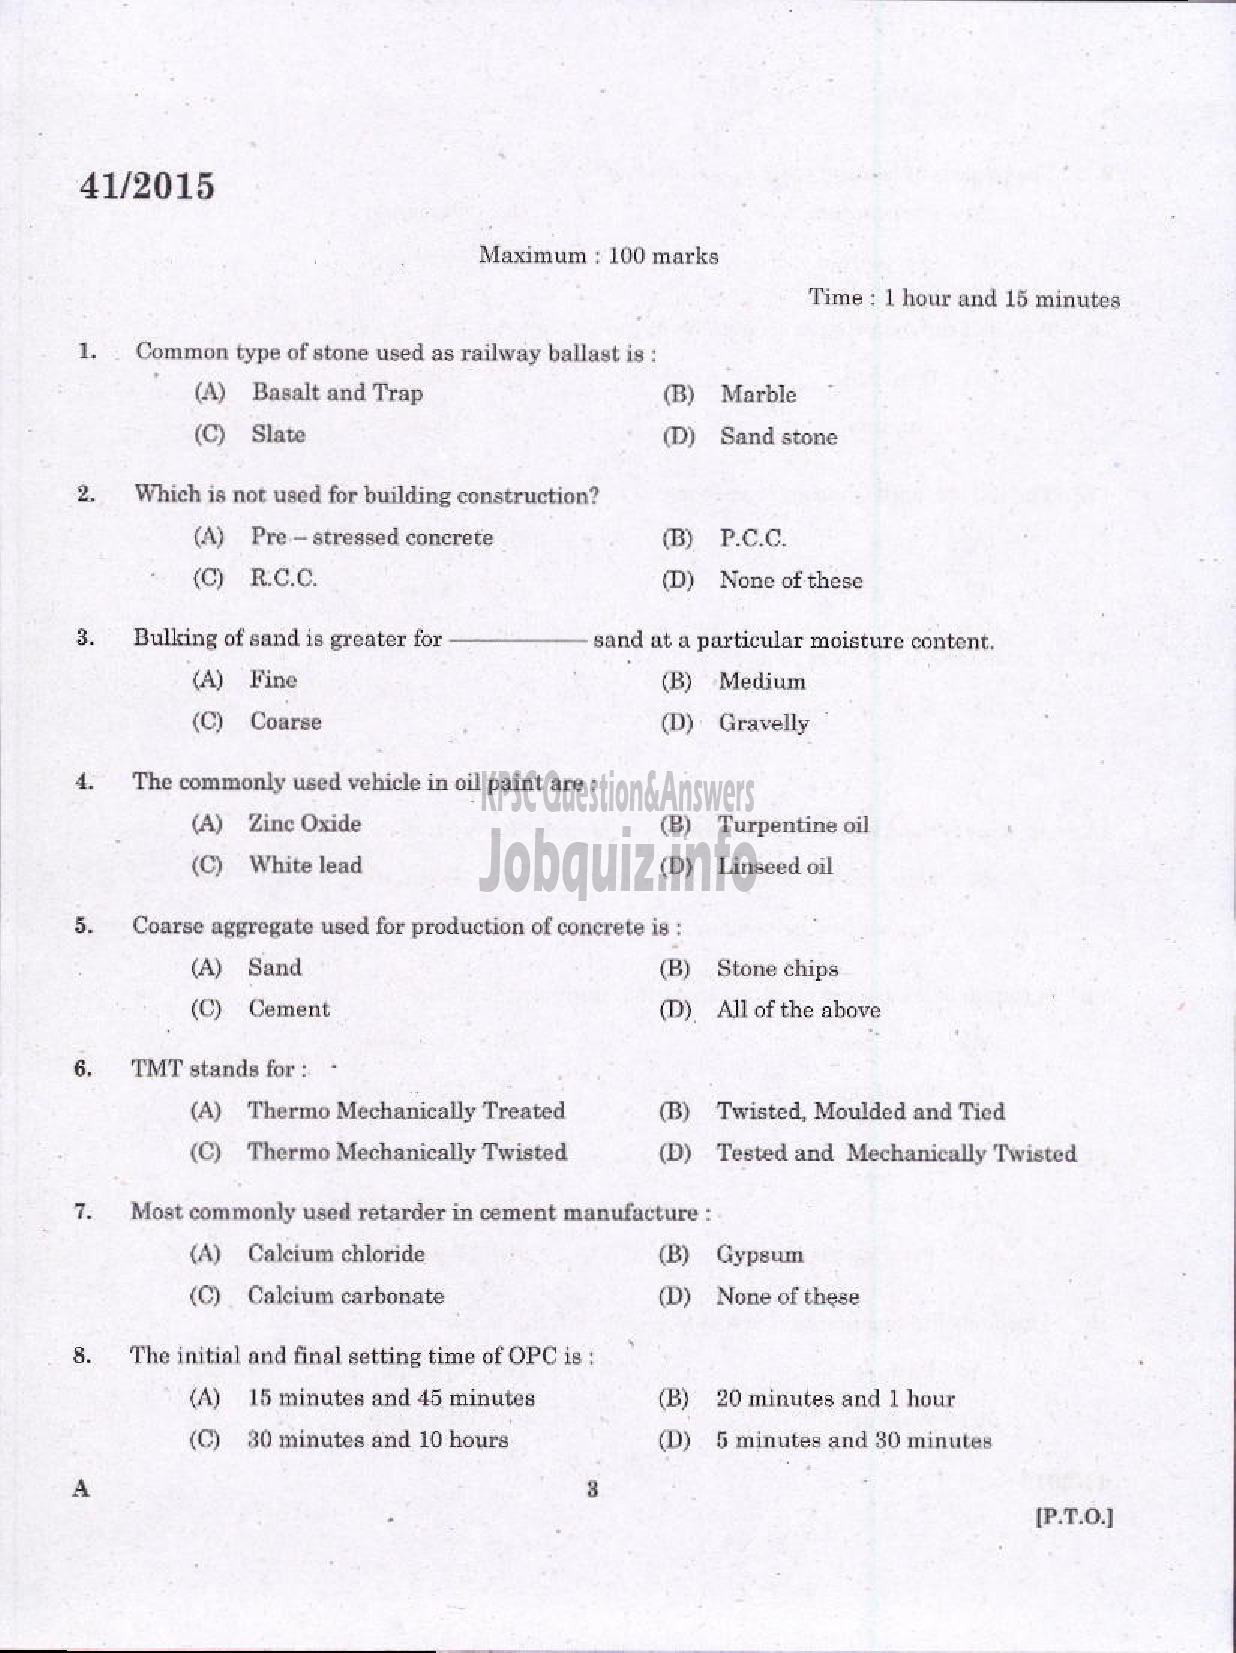 Kerala PSC Question Paper - LABORATORY TECHNICAL ASSISTANT CIVIL CONSTRUCTION AND MAINTENANCE VOCATIONAL HIGHER SECONDARY EDUCATION-1